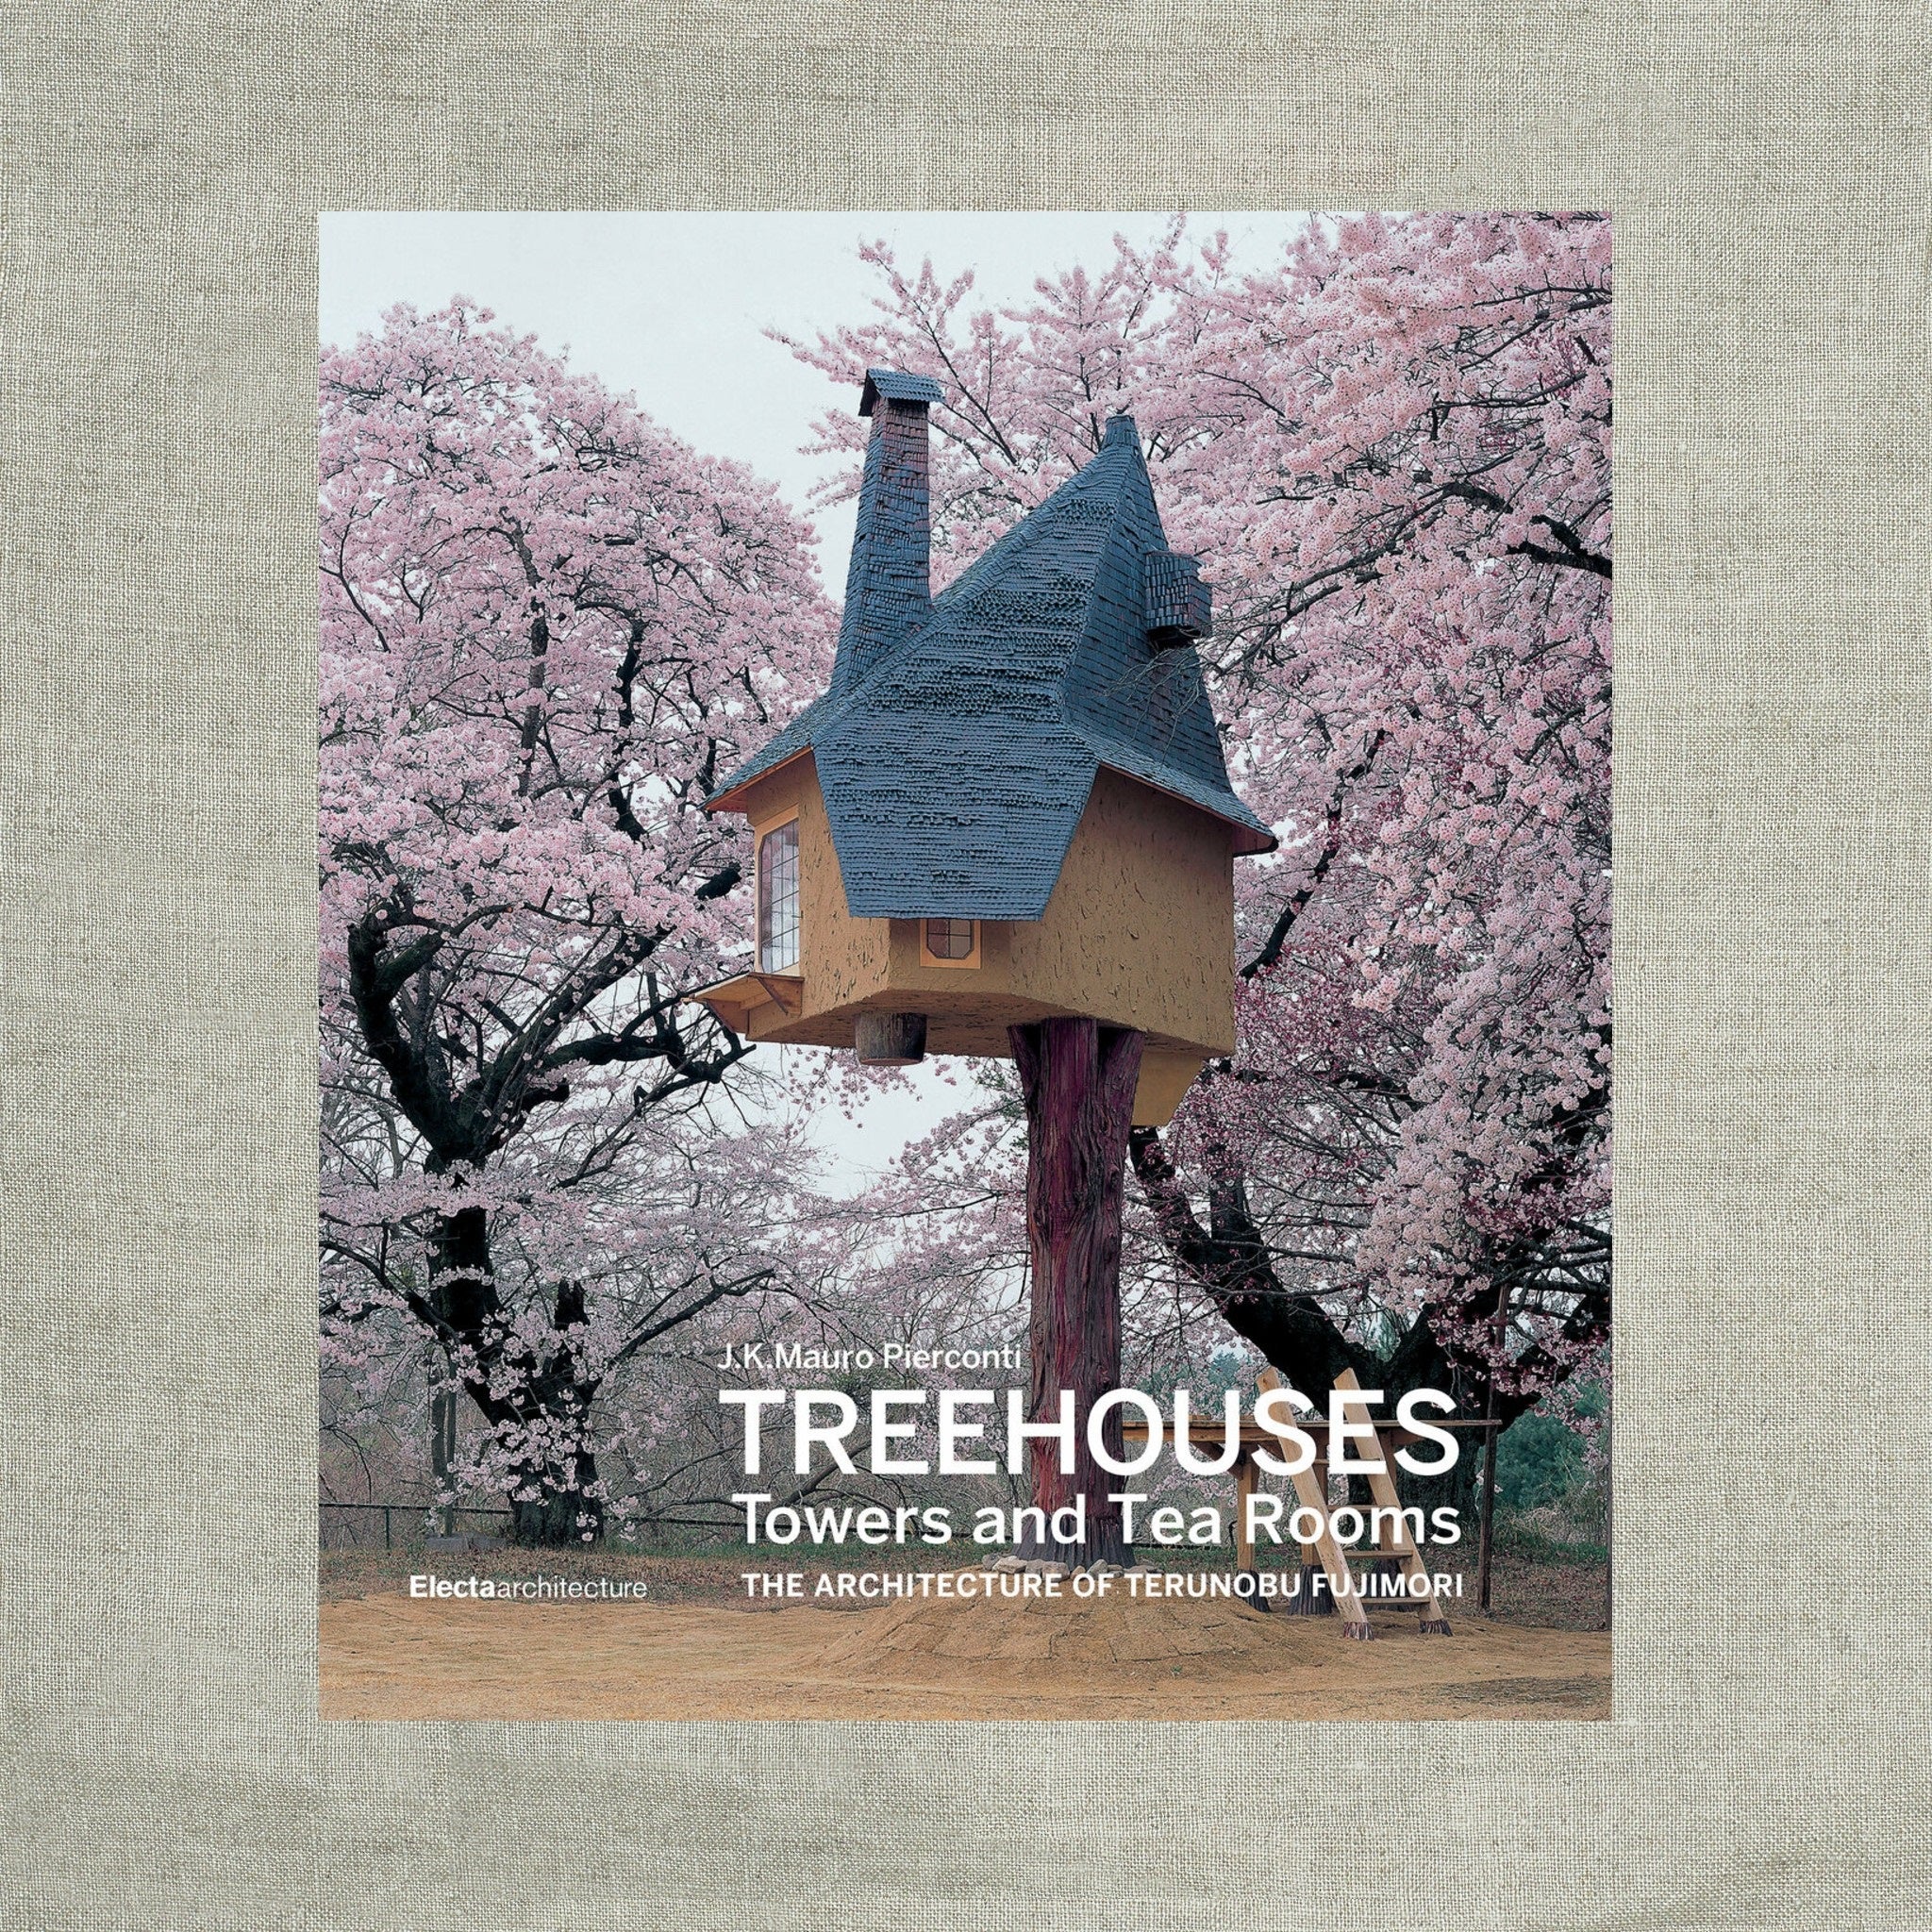 Step Inside Tulum's Treehouse Version of the Guggenheim Museum